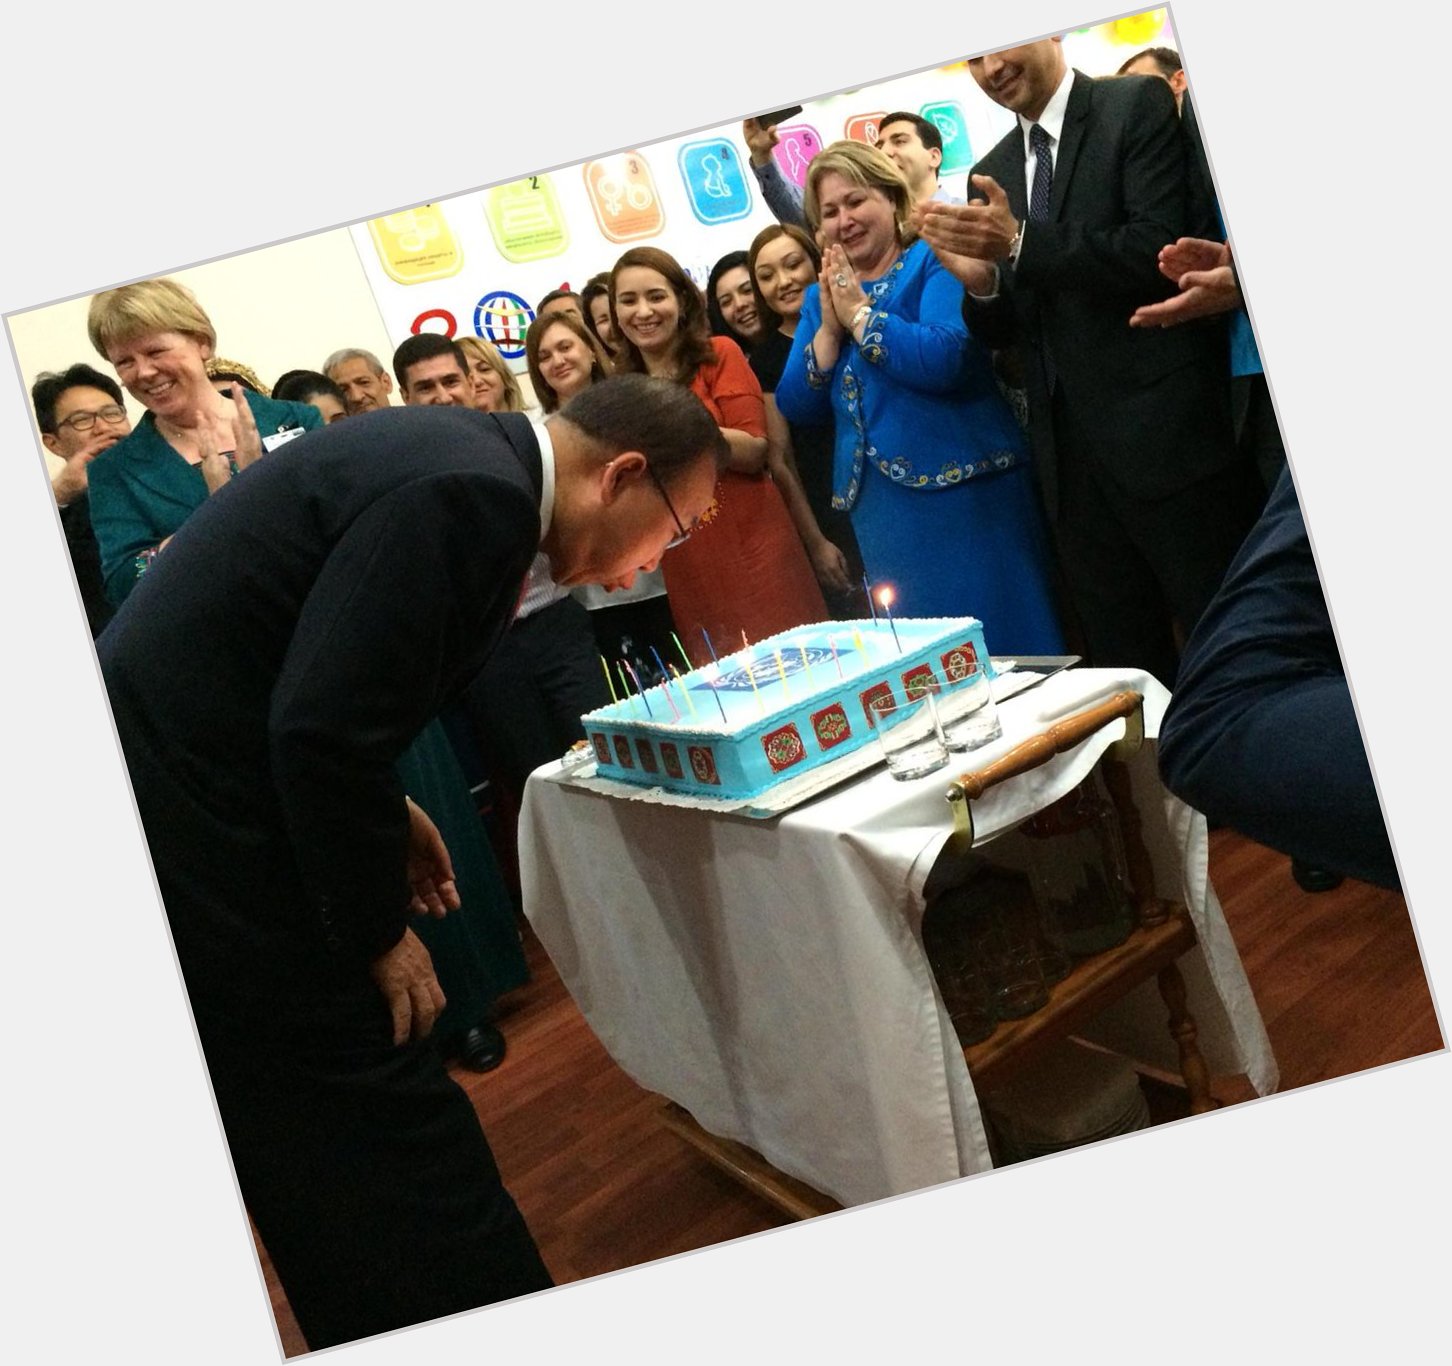 UN: Happy birthday, Ban Ki-moon! UN staff in Turkmenistan surprised him with a cake.  via UN_Spokesperson